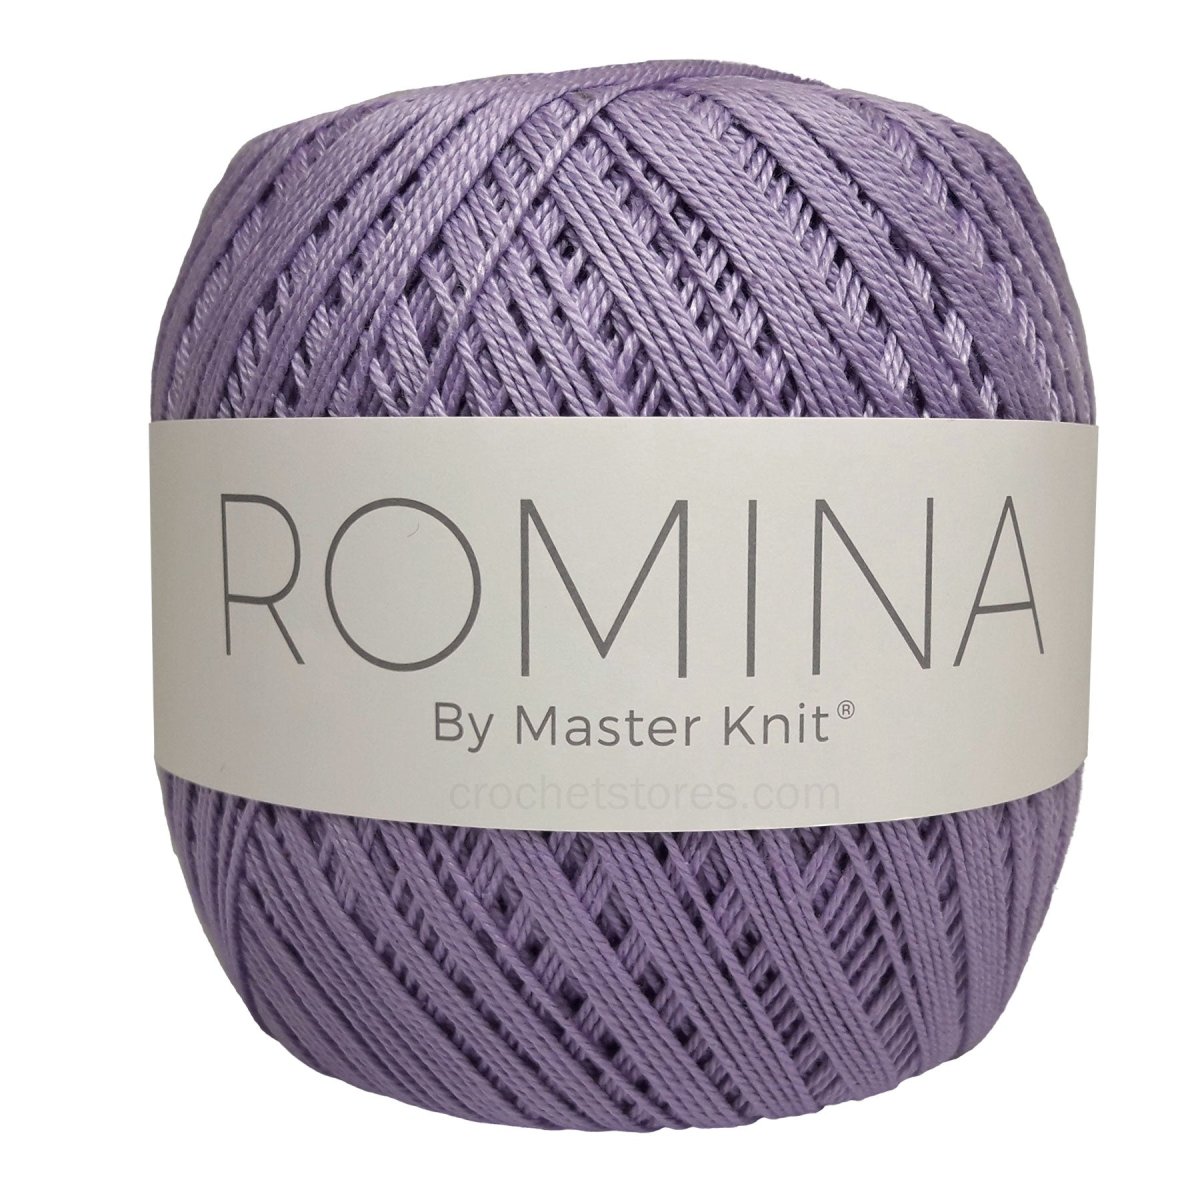 ROMINA - Crochetstores9335-453745051438661